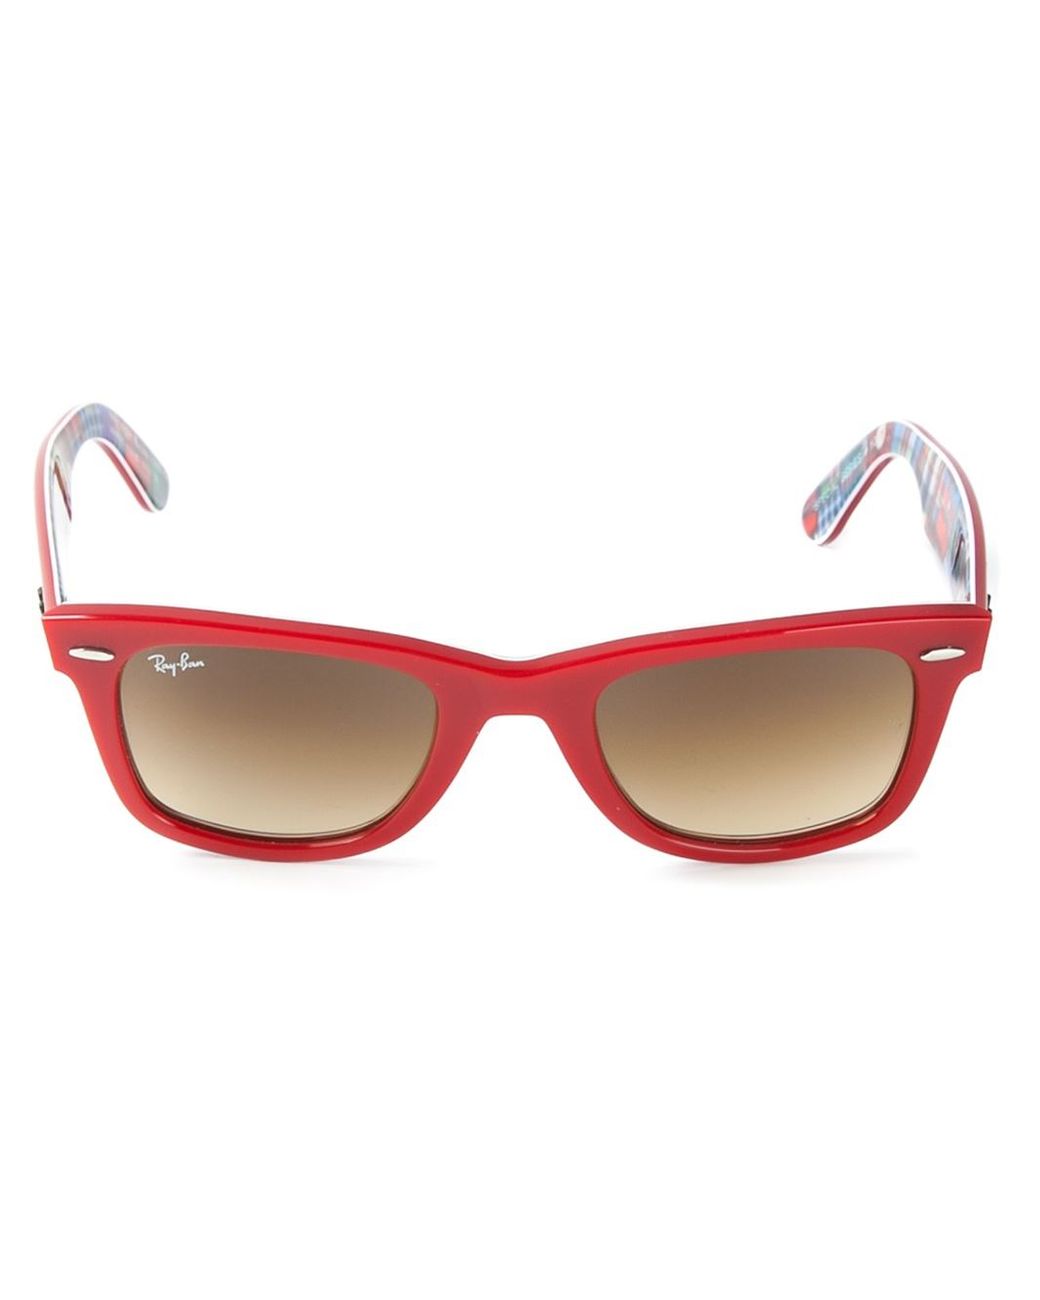 Discover 159+ red wayfarer sunglasses best